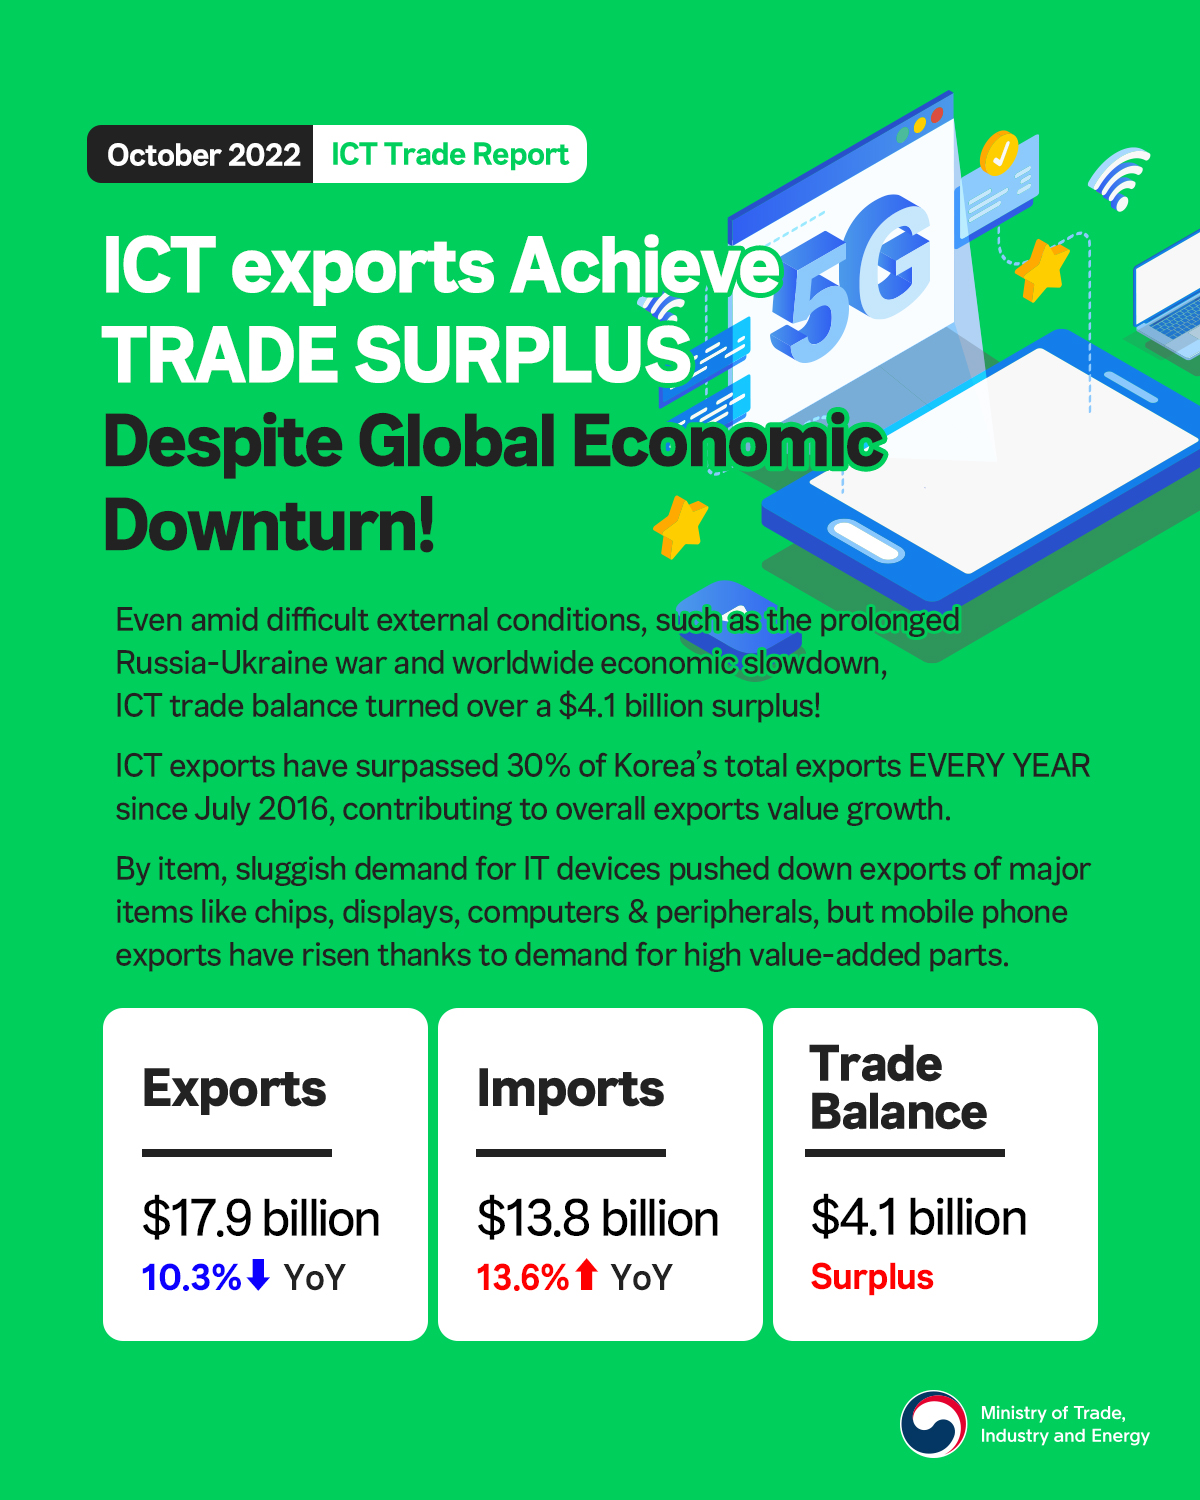 Korea's ICT exports achieve trade surplus amid global economic difficulties! Image 0